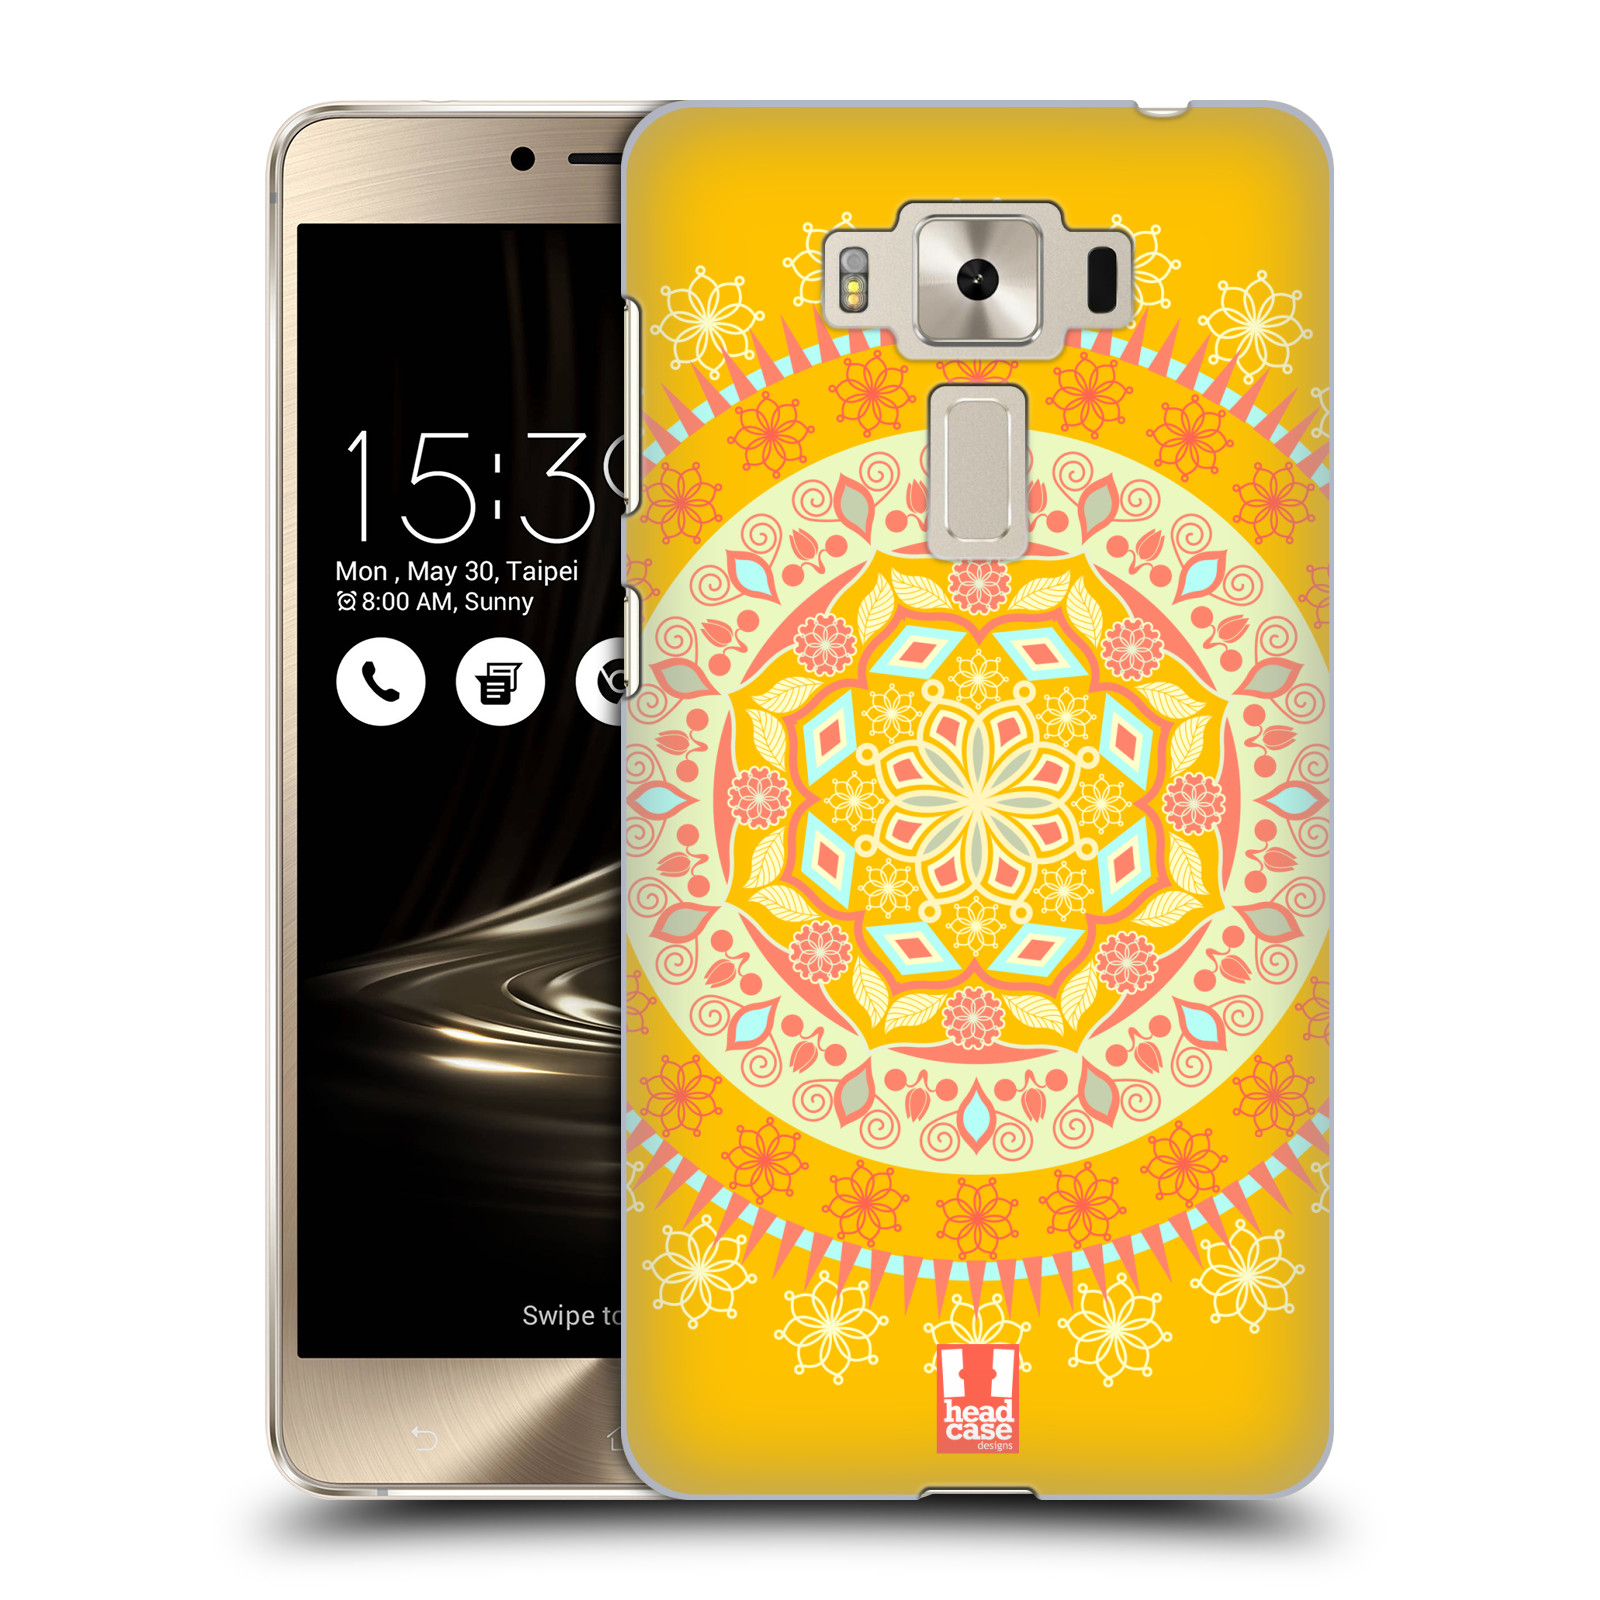 HEAD CASE plastový obal na mobil Asus Zenfone 3 DELUXE ZS550KL vzor Indie Mandala slunce barevný motiv ŽLUTÁ